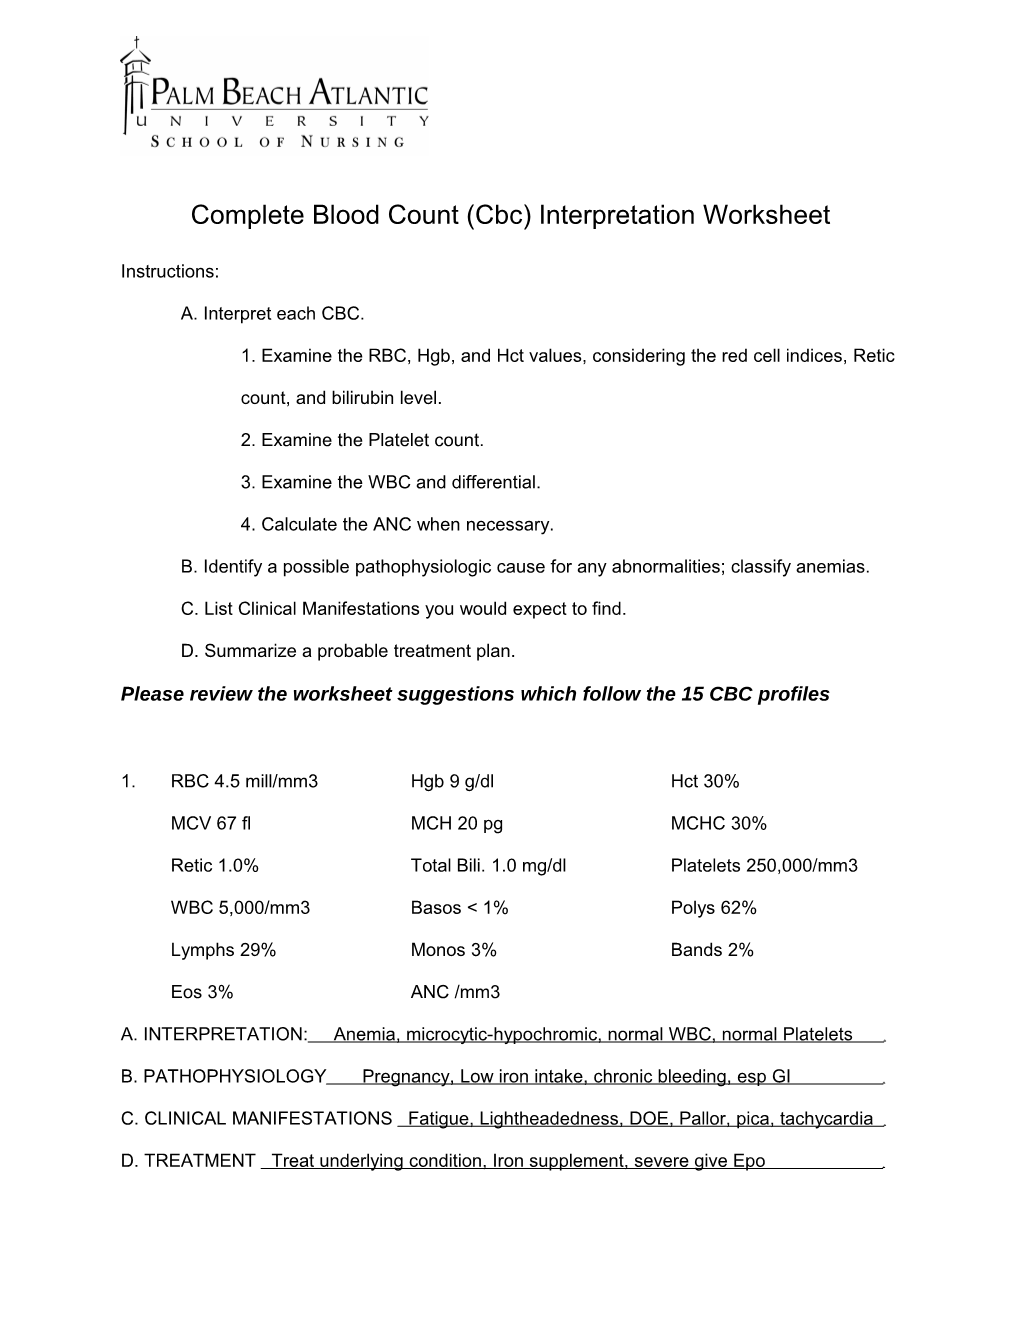 Complete Blood Count (Cbc) Interpretation Worksheet